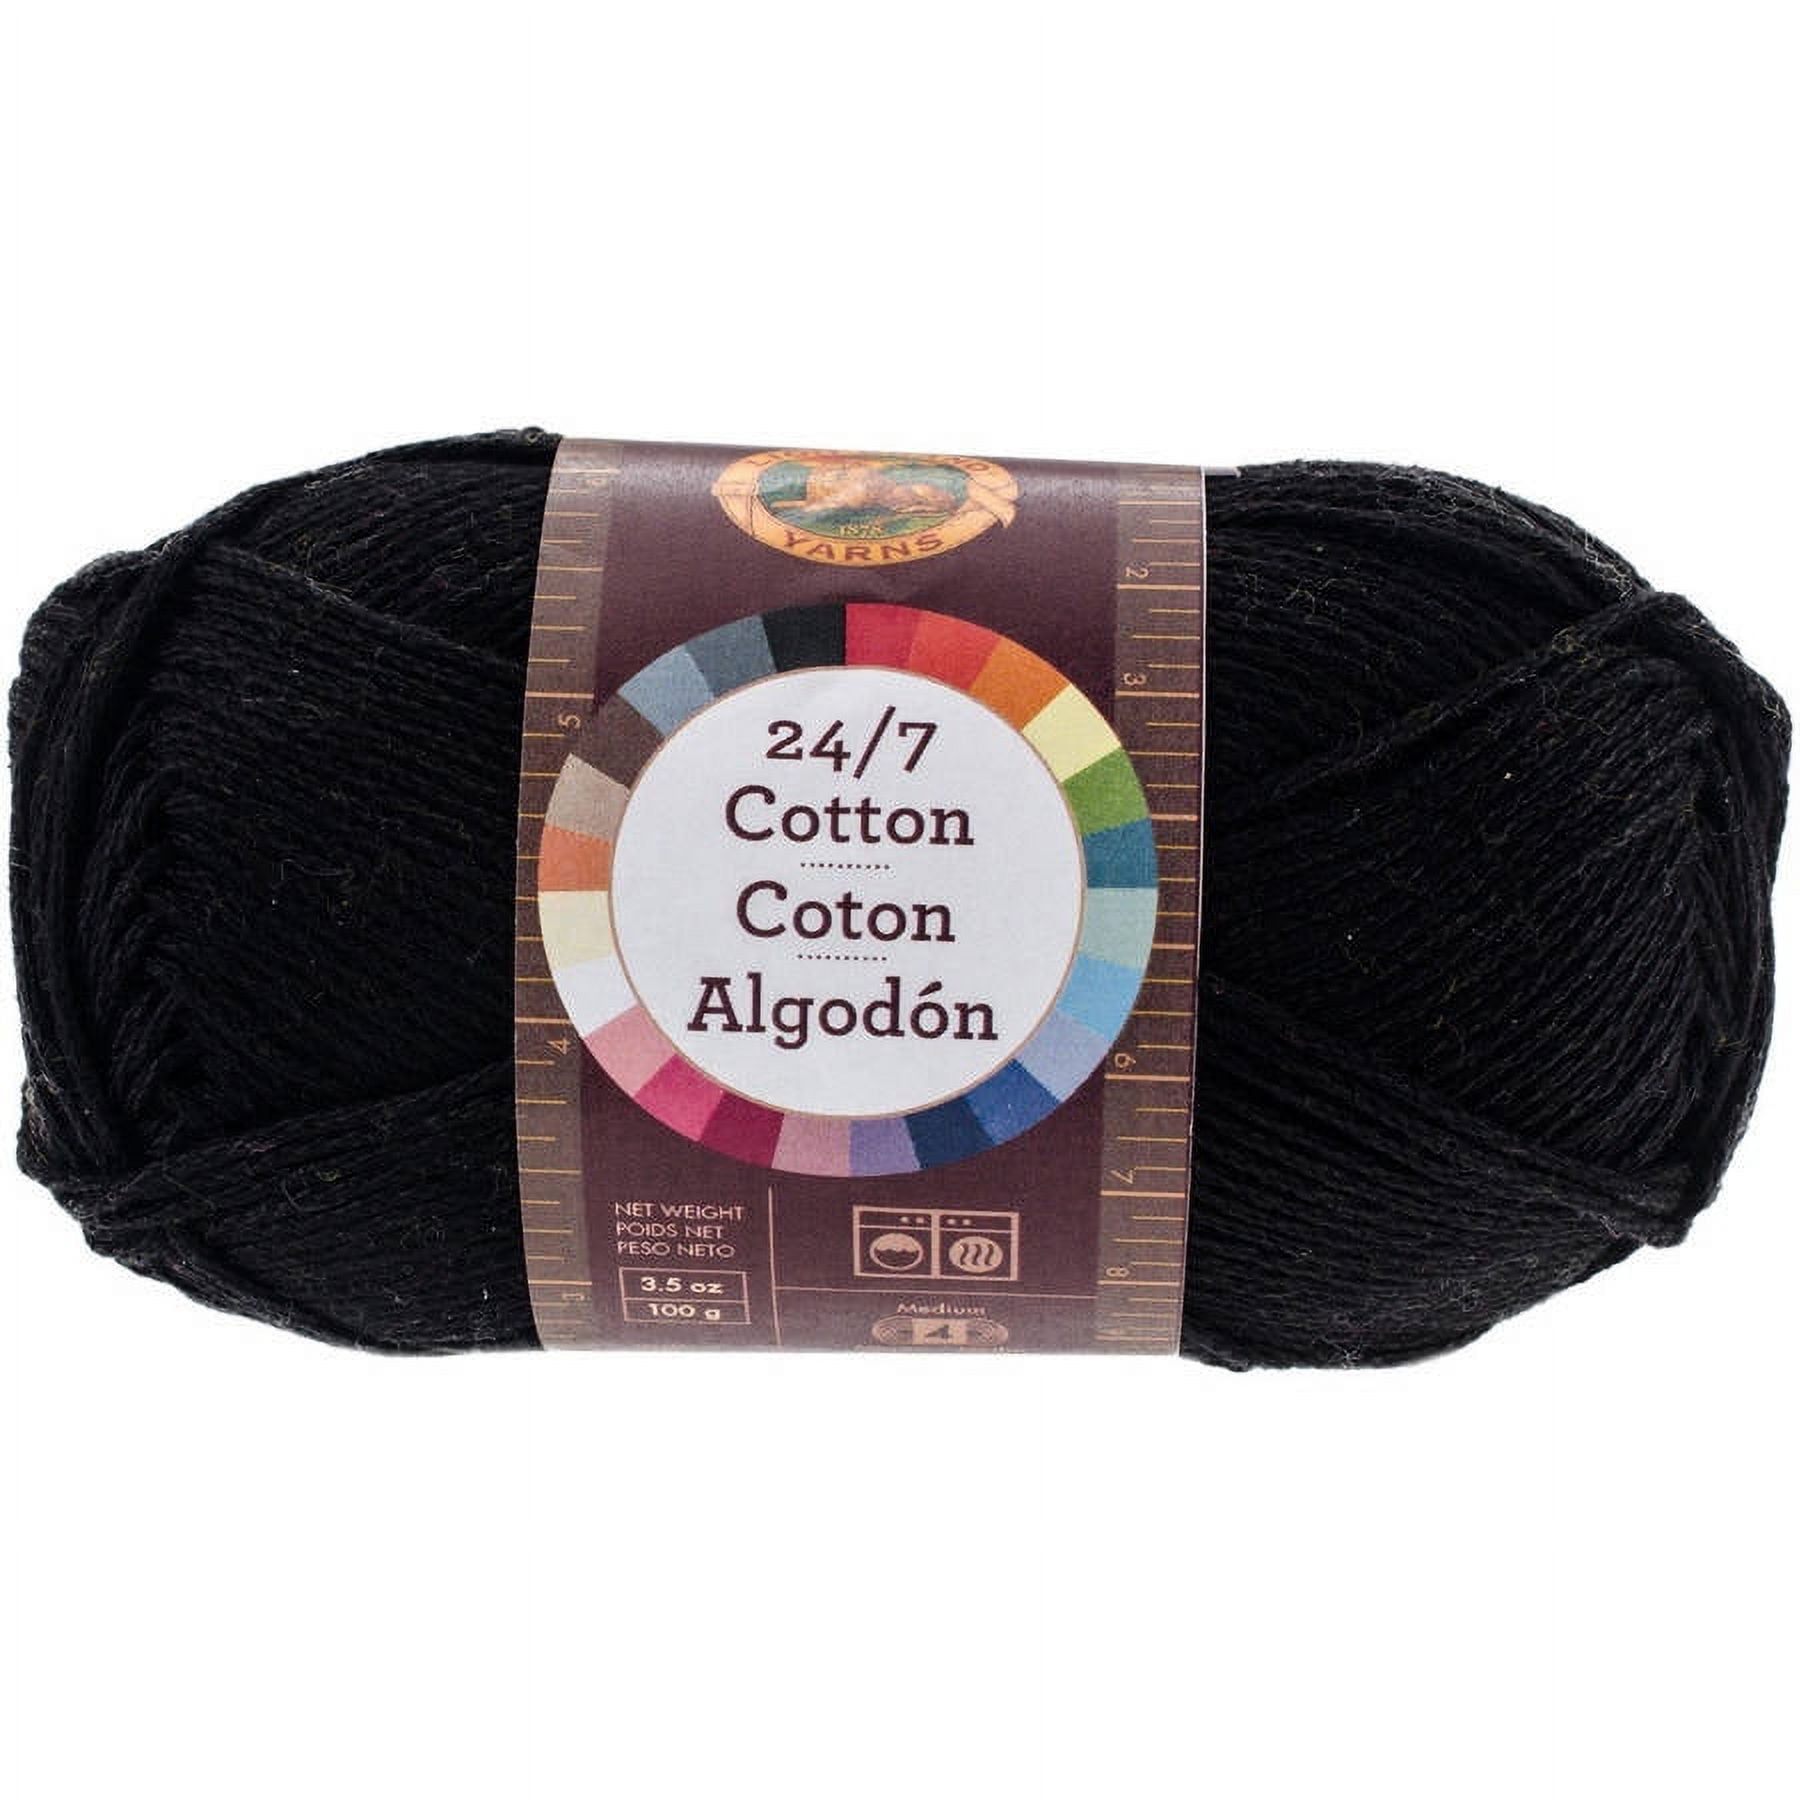 Lion Brand 24/7 Cotton Black Cotton Yarn 